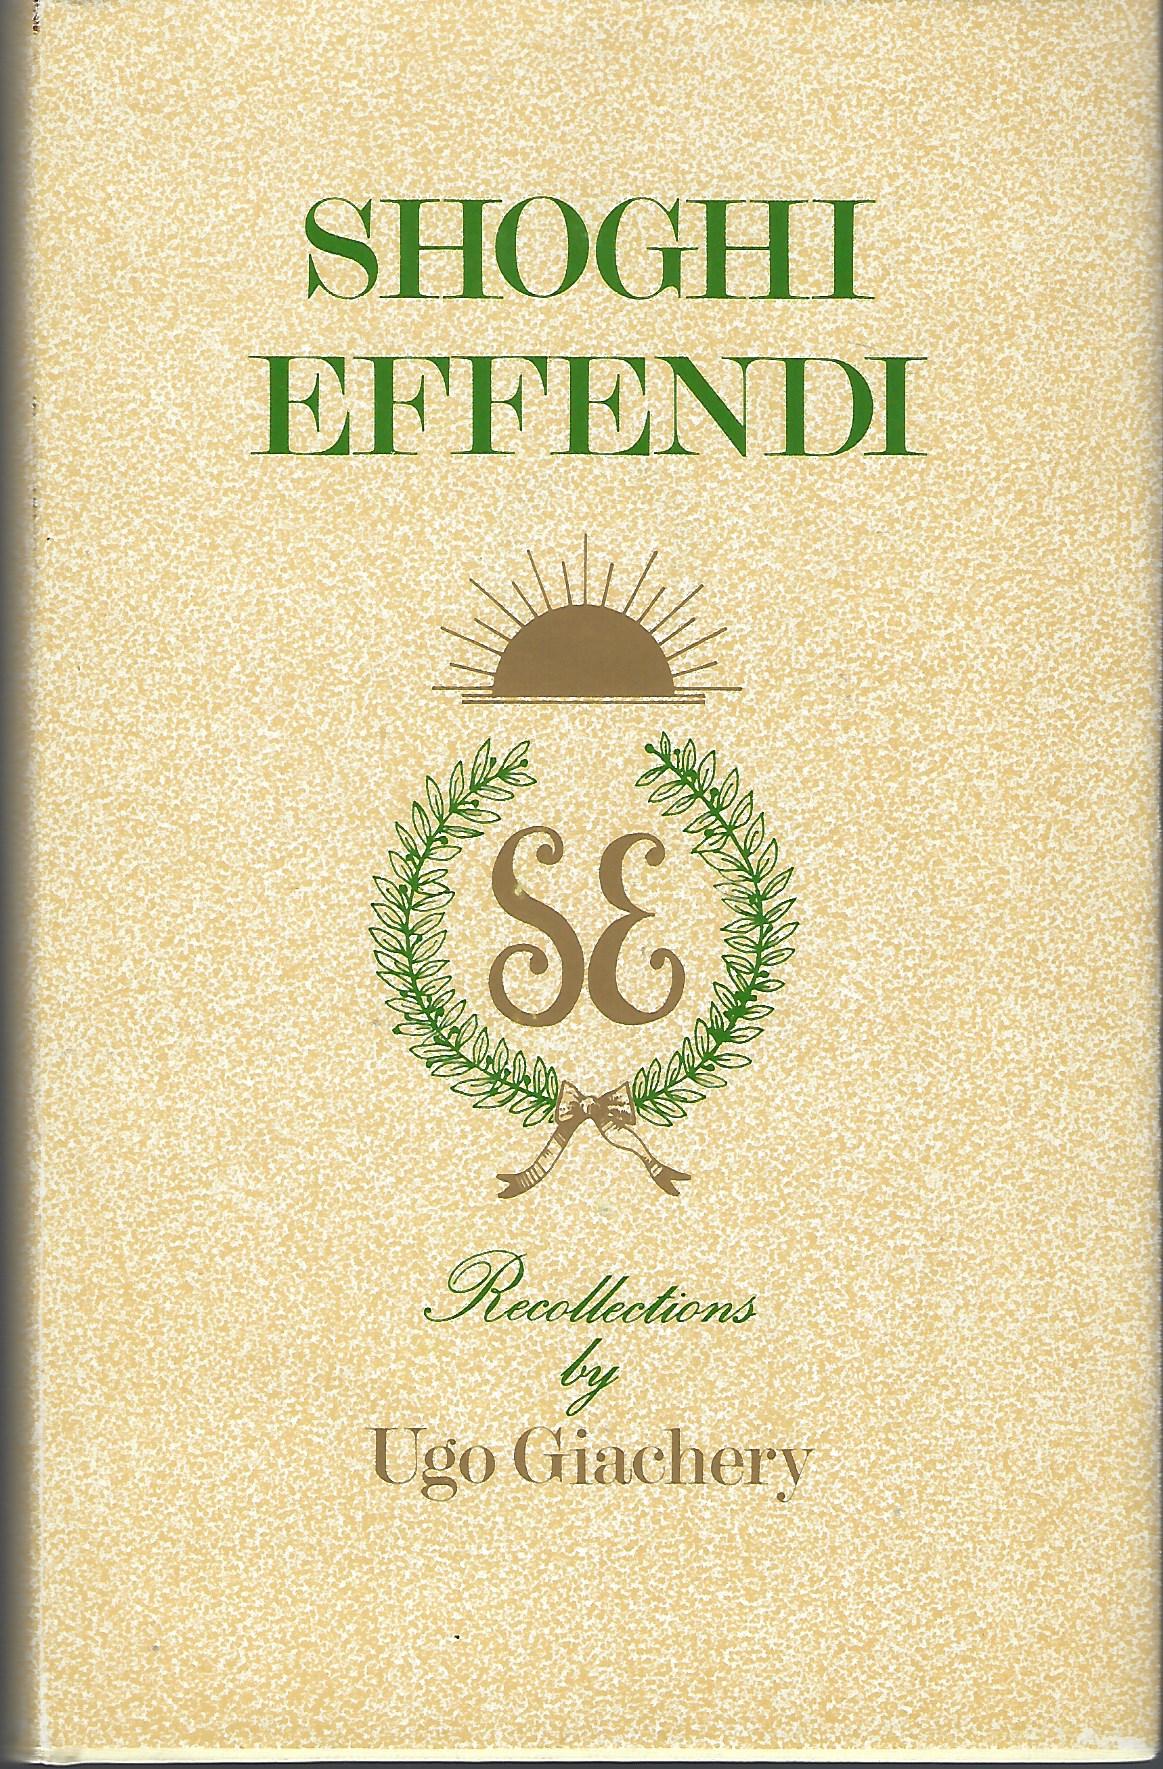 Shoghi Effendi; recollections - Giachery, Ugo